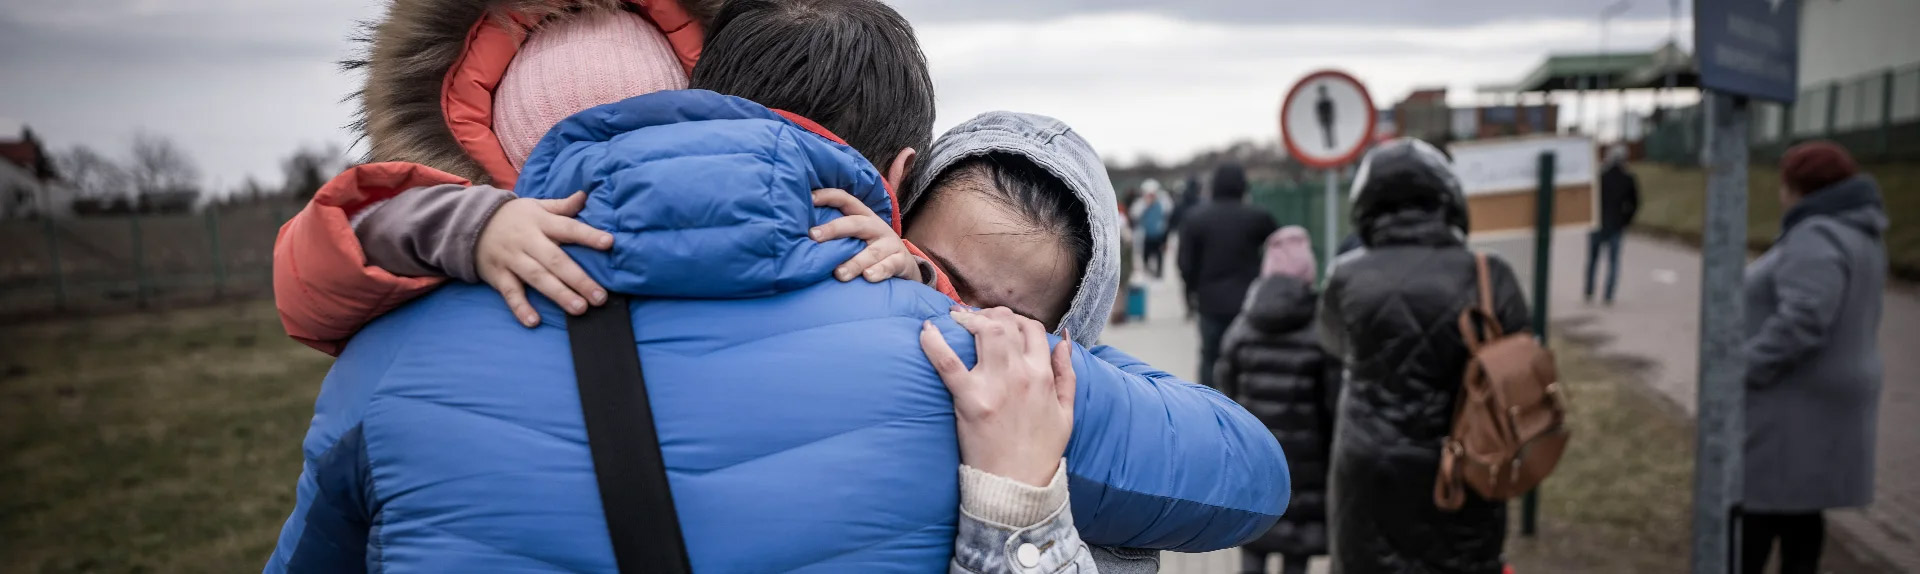 Refugees in the Ukraine